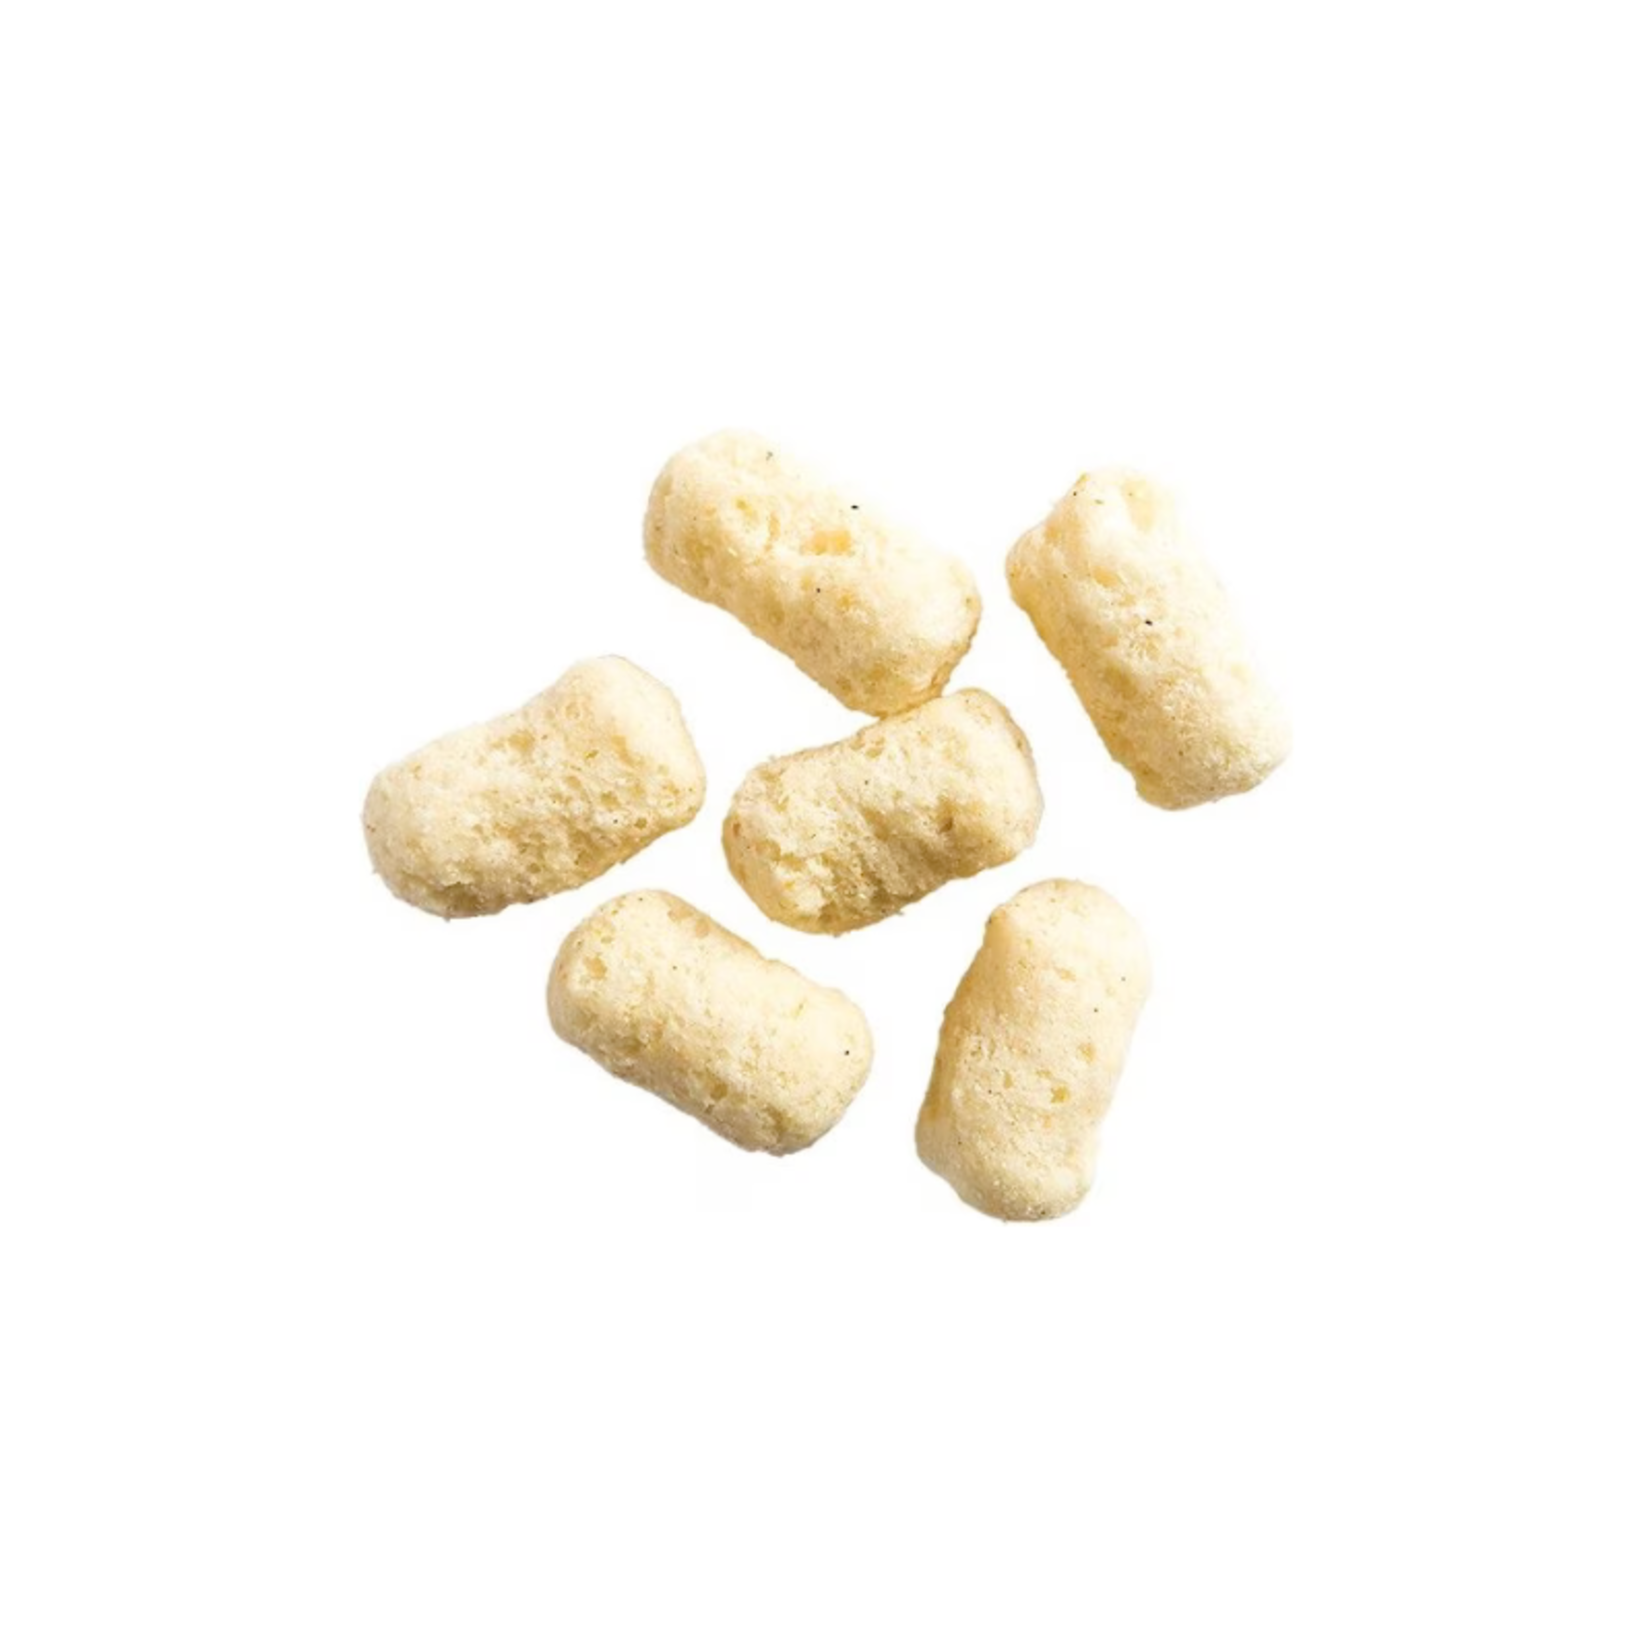 Bixbi 4 oz. - Sweet Potato & Apple - Light & Crunchy Dog Treats - Bark Pops - Bixbi